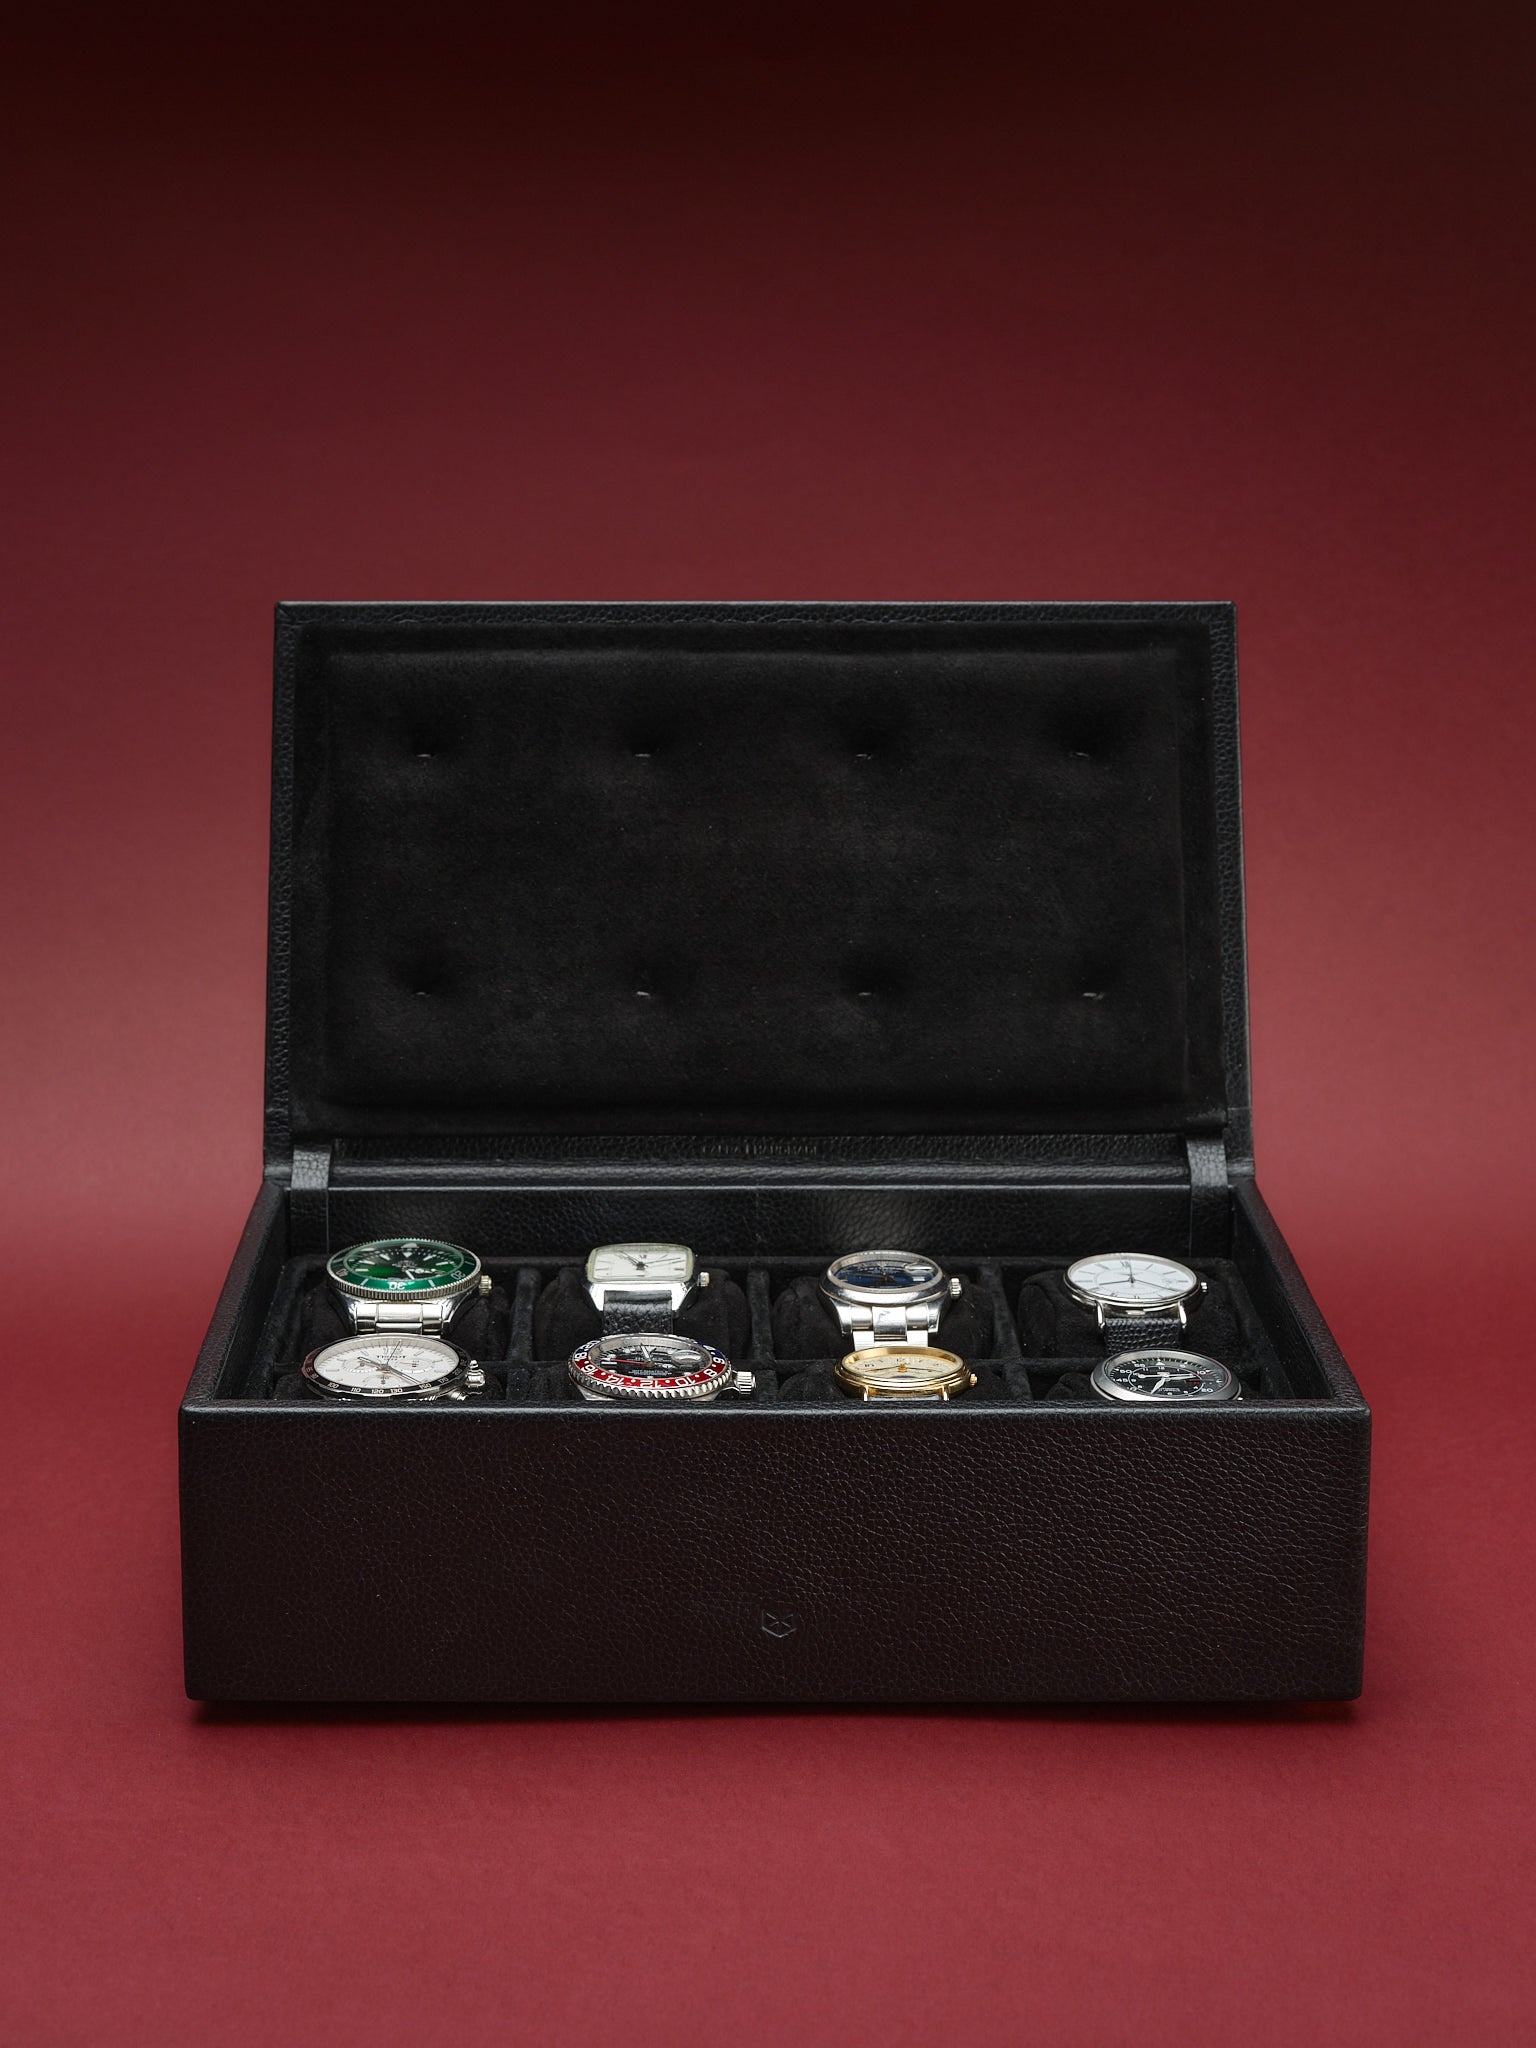 Suede Interior. Men's Watch Case. Leather Watch Box Black by Capra